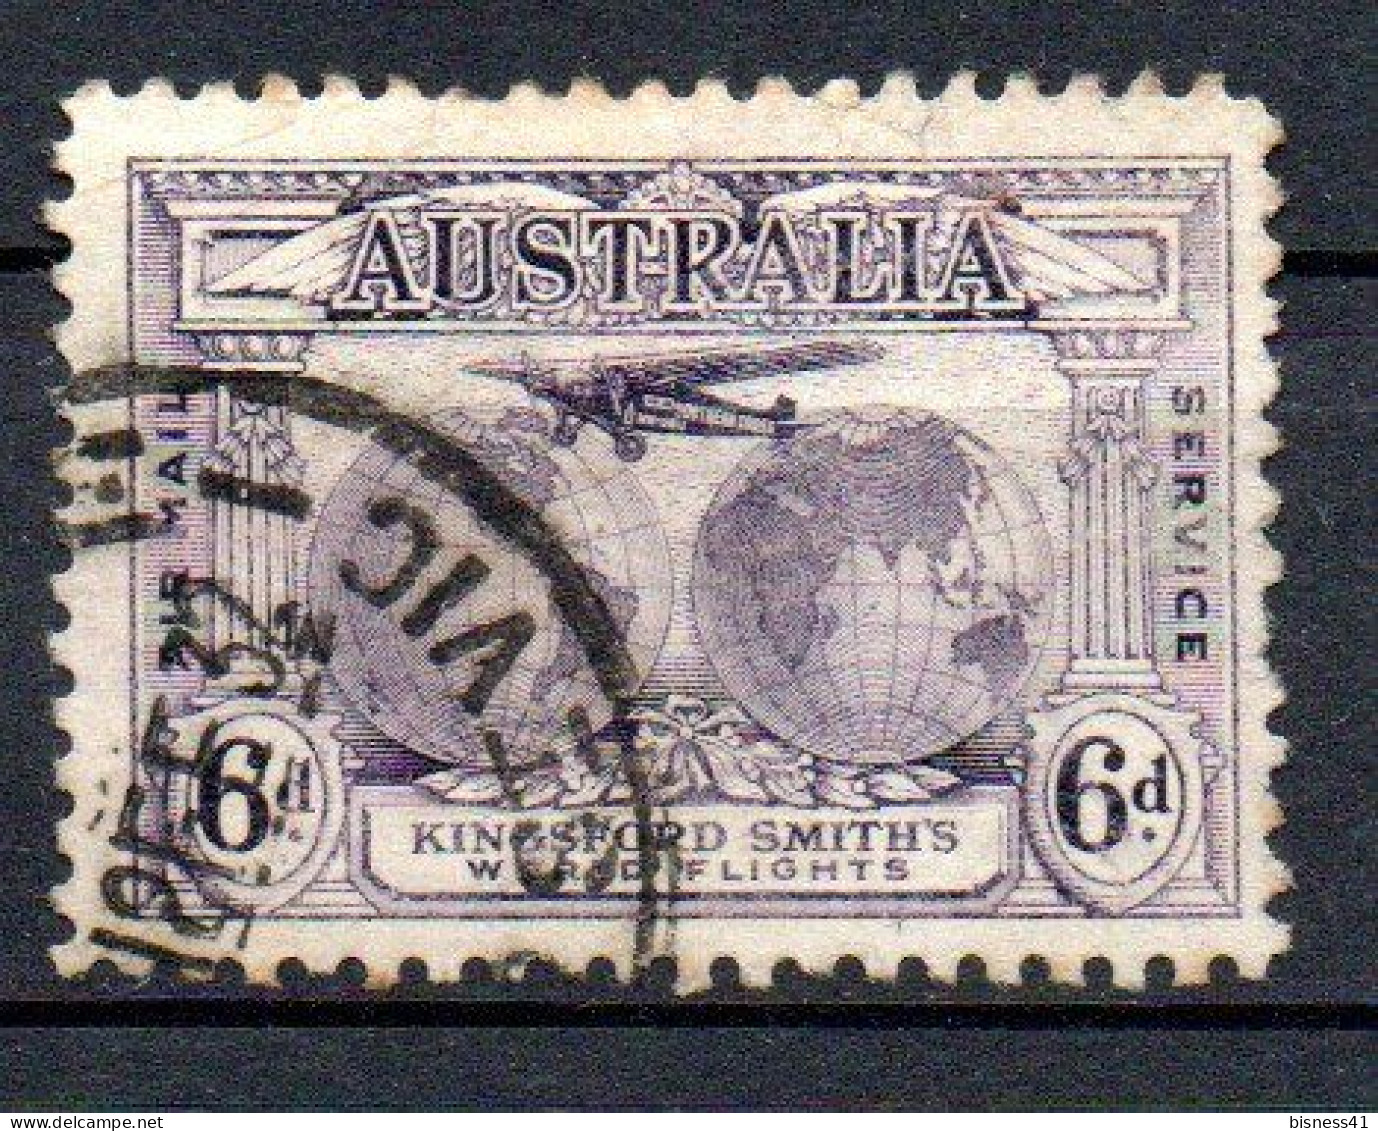 Col33 Australia Australie 1926 Aerien N° 3 Oblitéré Cote : 15,00€ - Usados